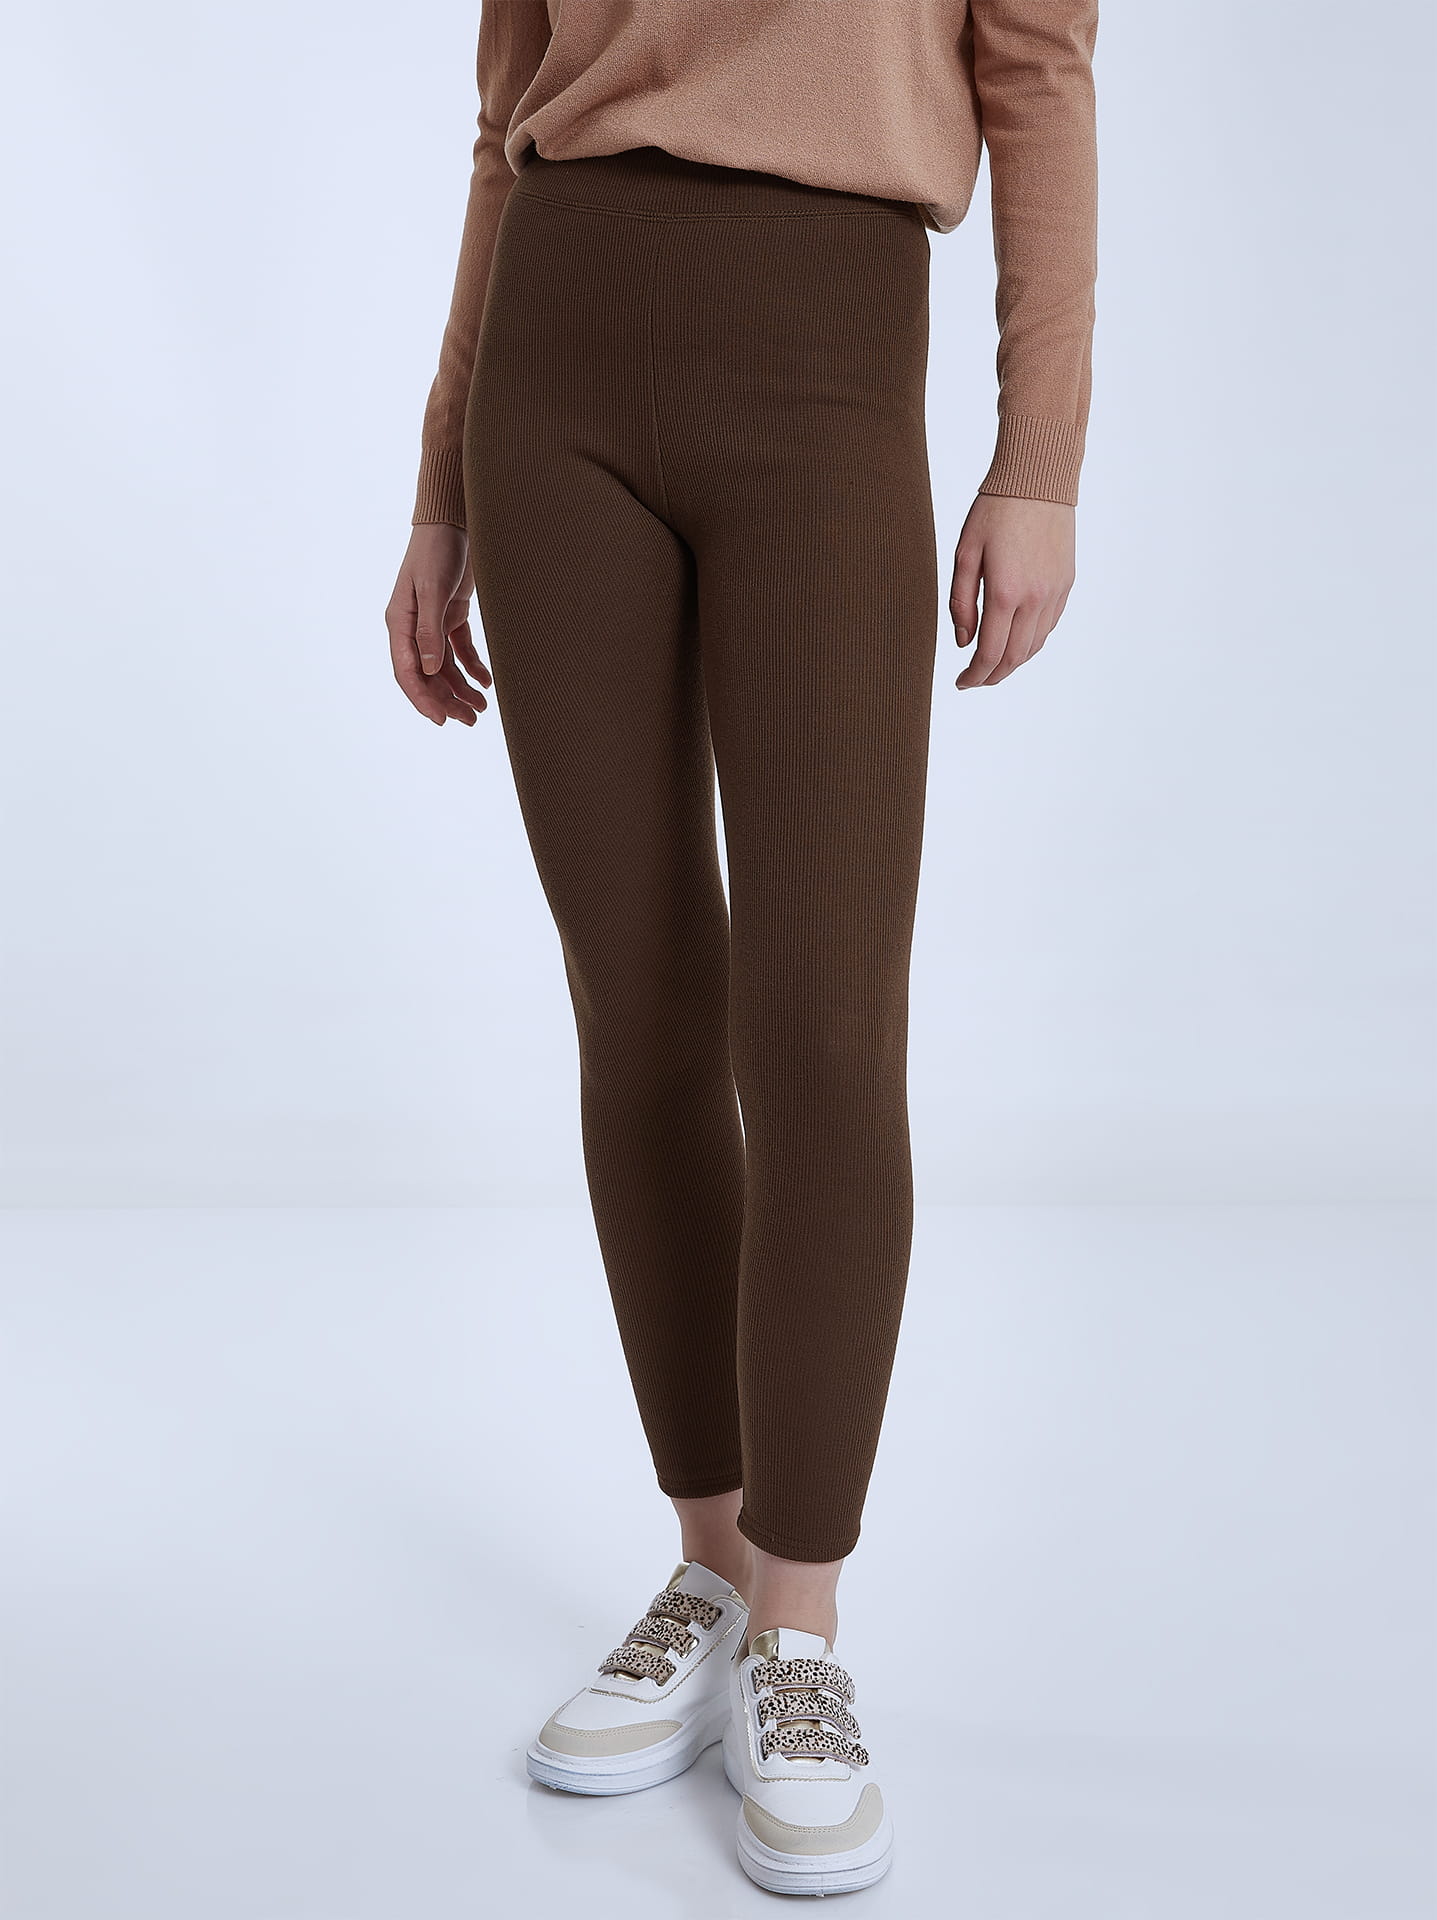 Ribbed leggings with fleece lining in dark brown, 12.99€